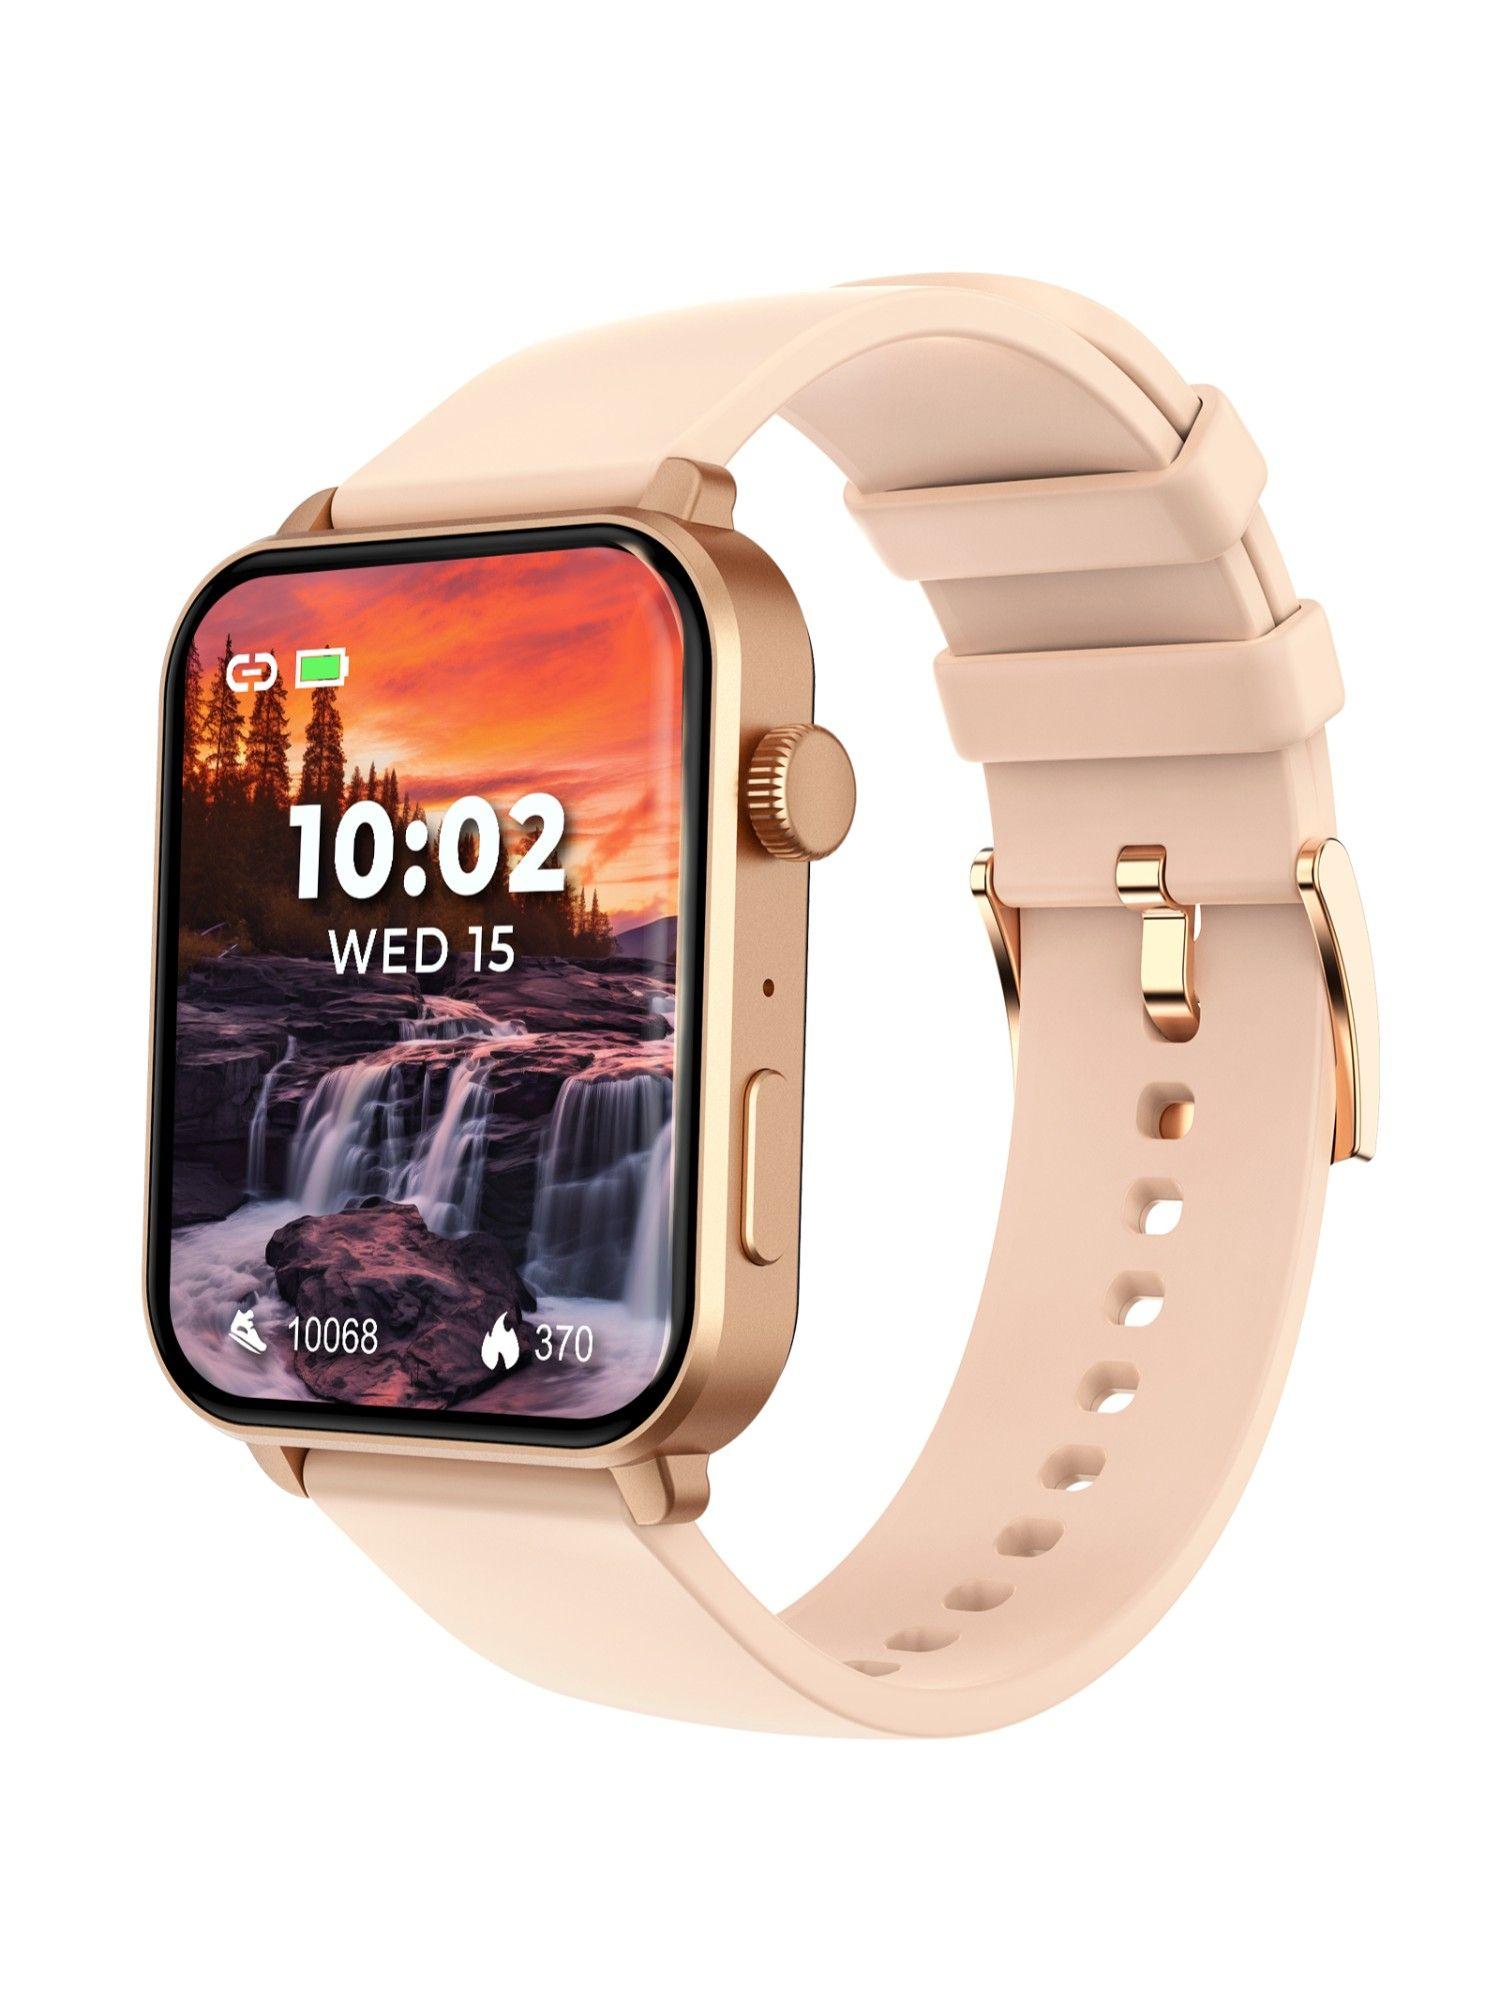 unbound 1.78" super amoled display, bluetooth calling smartwatch - pink